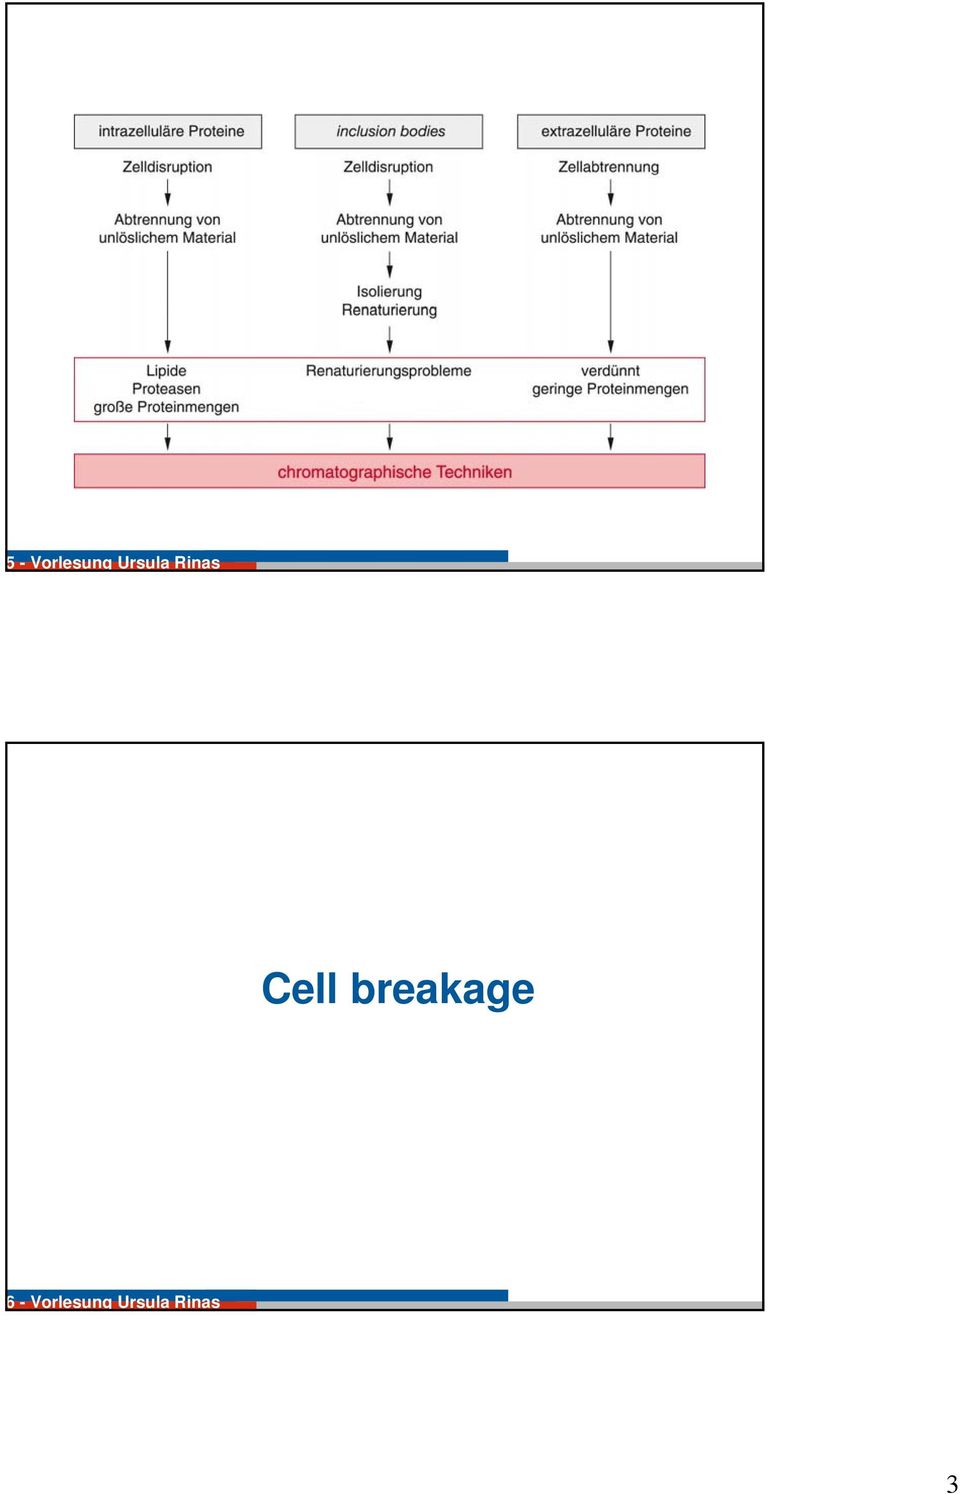 Cell breakage